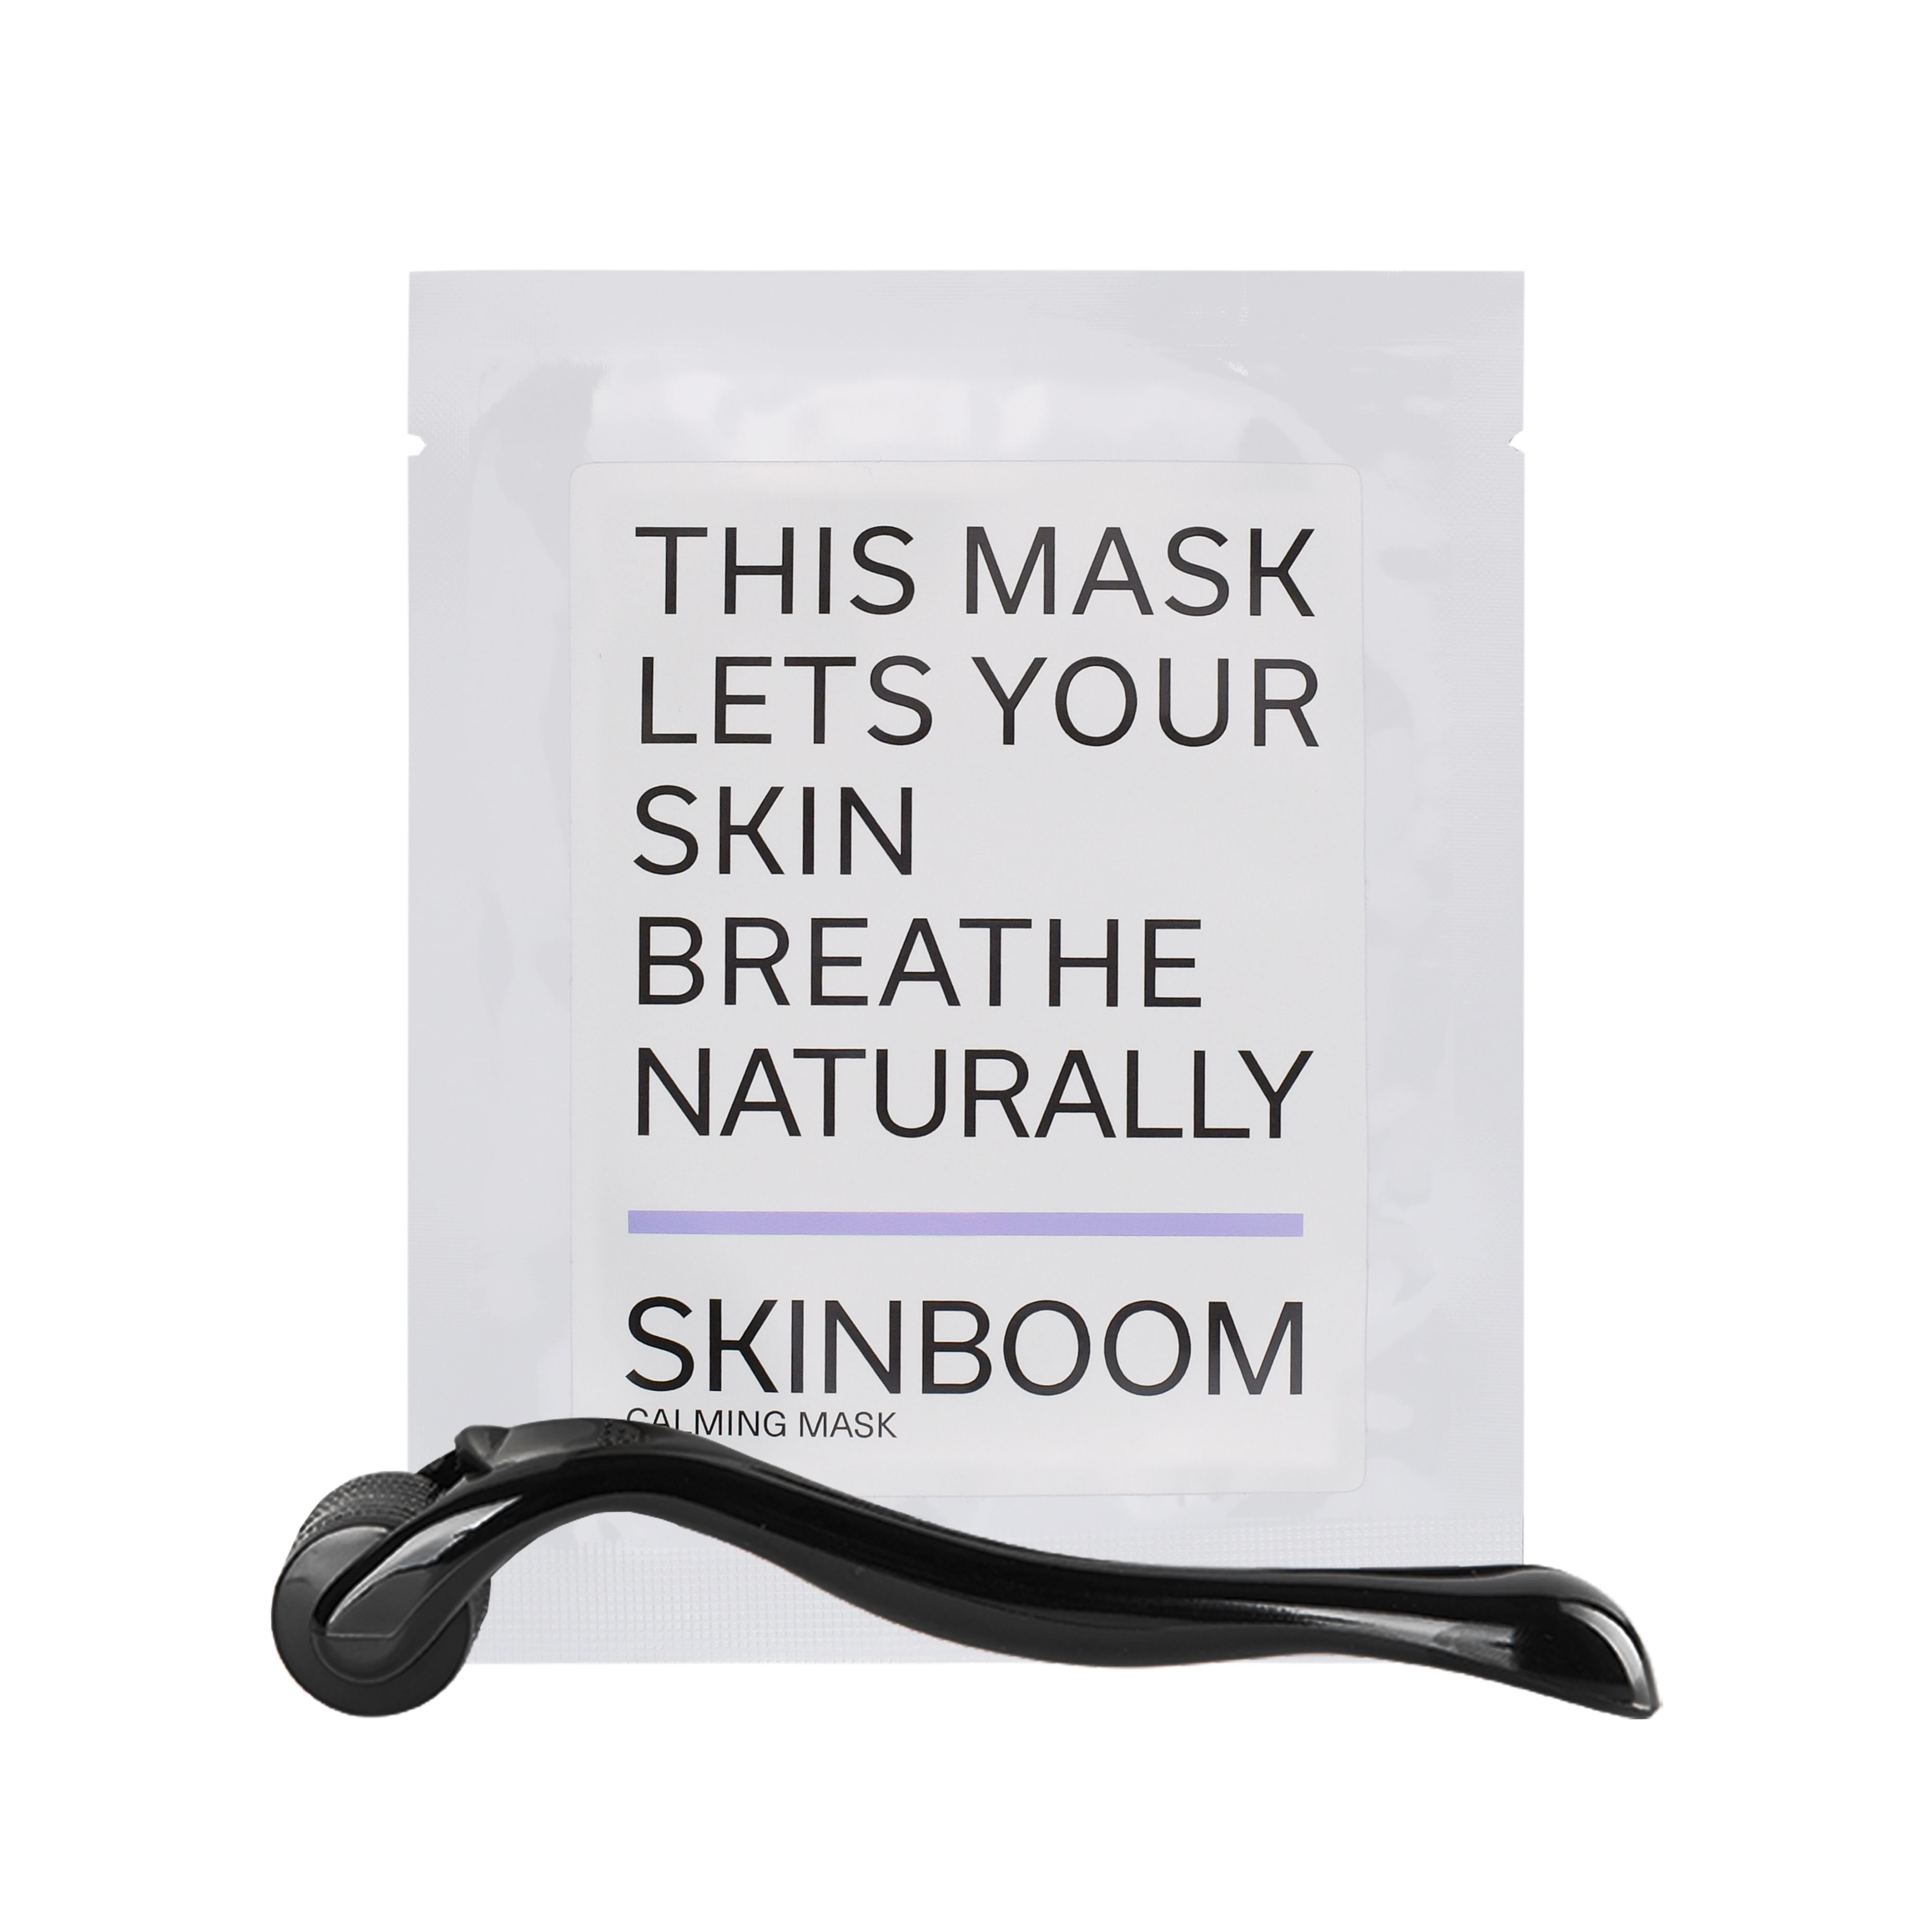 SKINBOOM Calming Mask mit 540 Needle Dermaroller